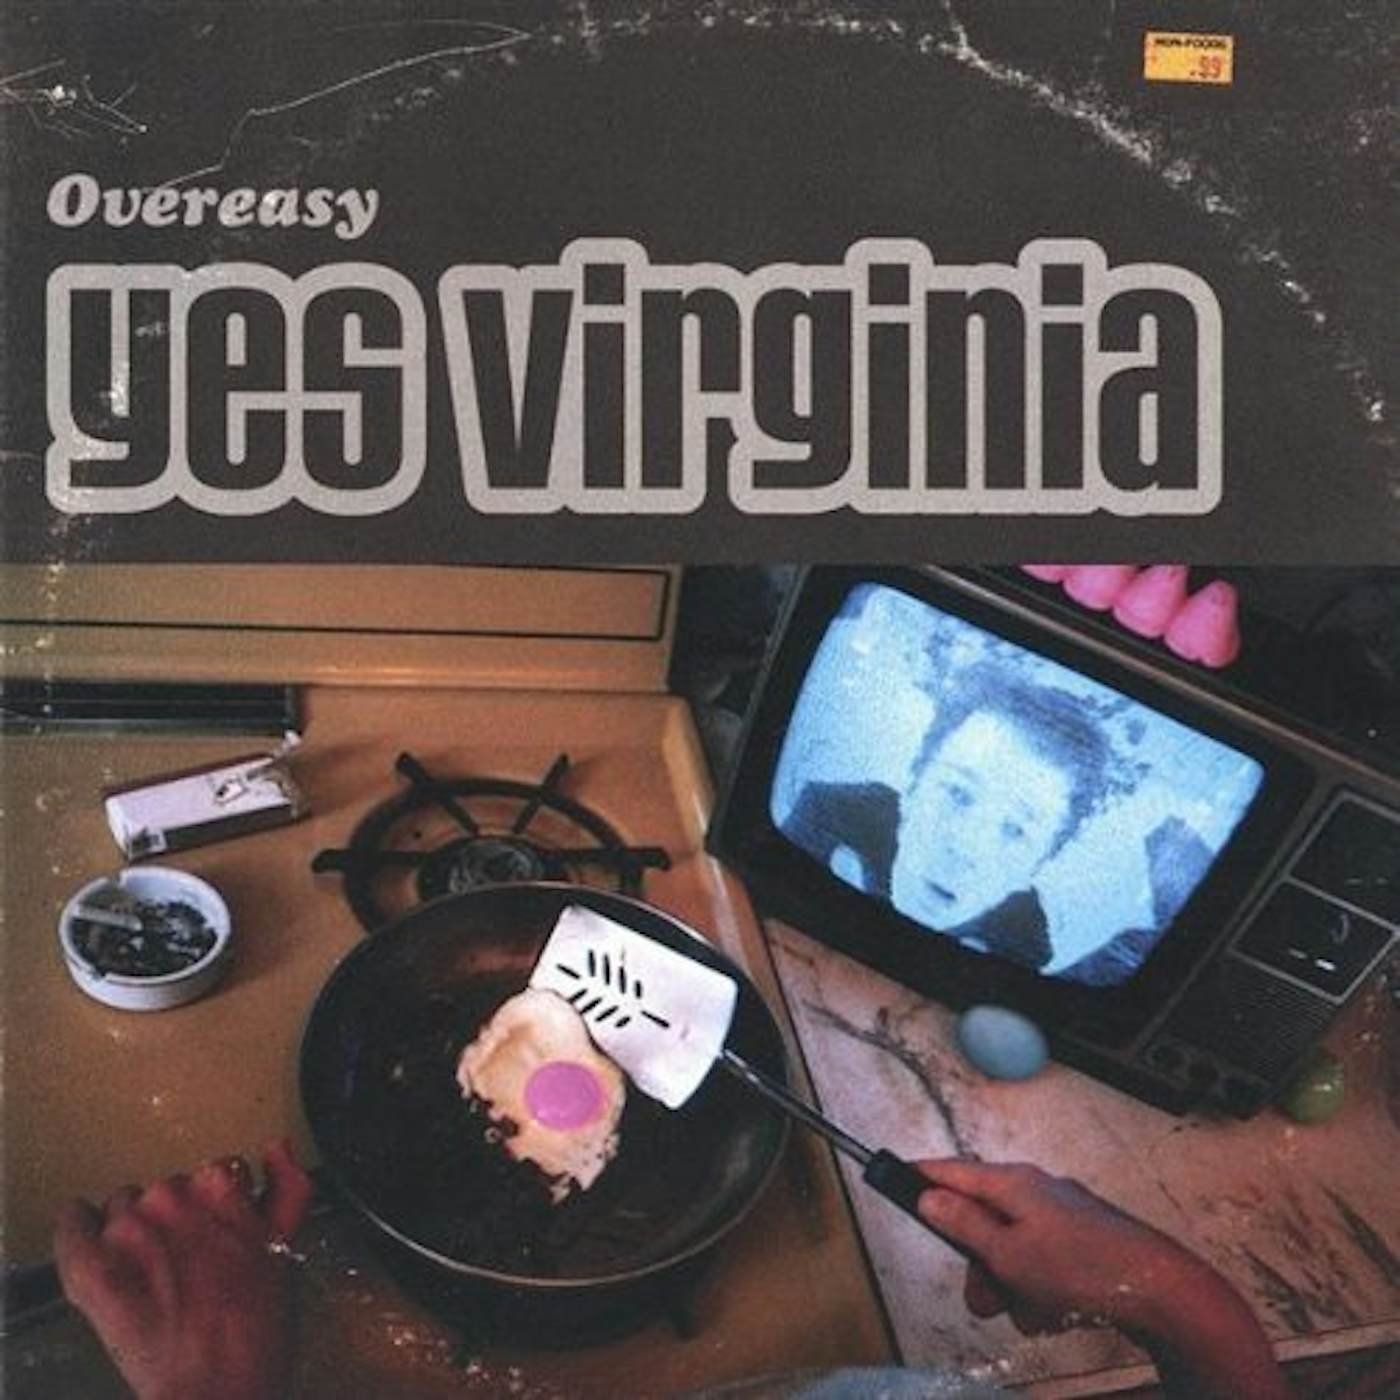 Yes Virginia OVEREASY CD